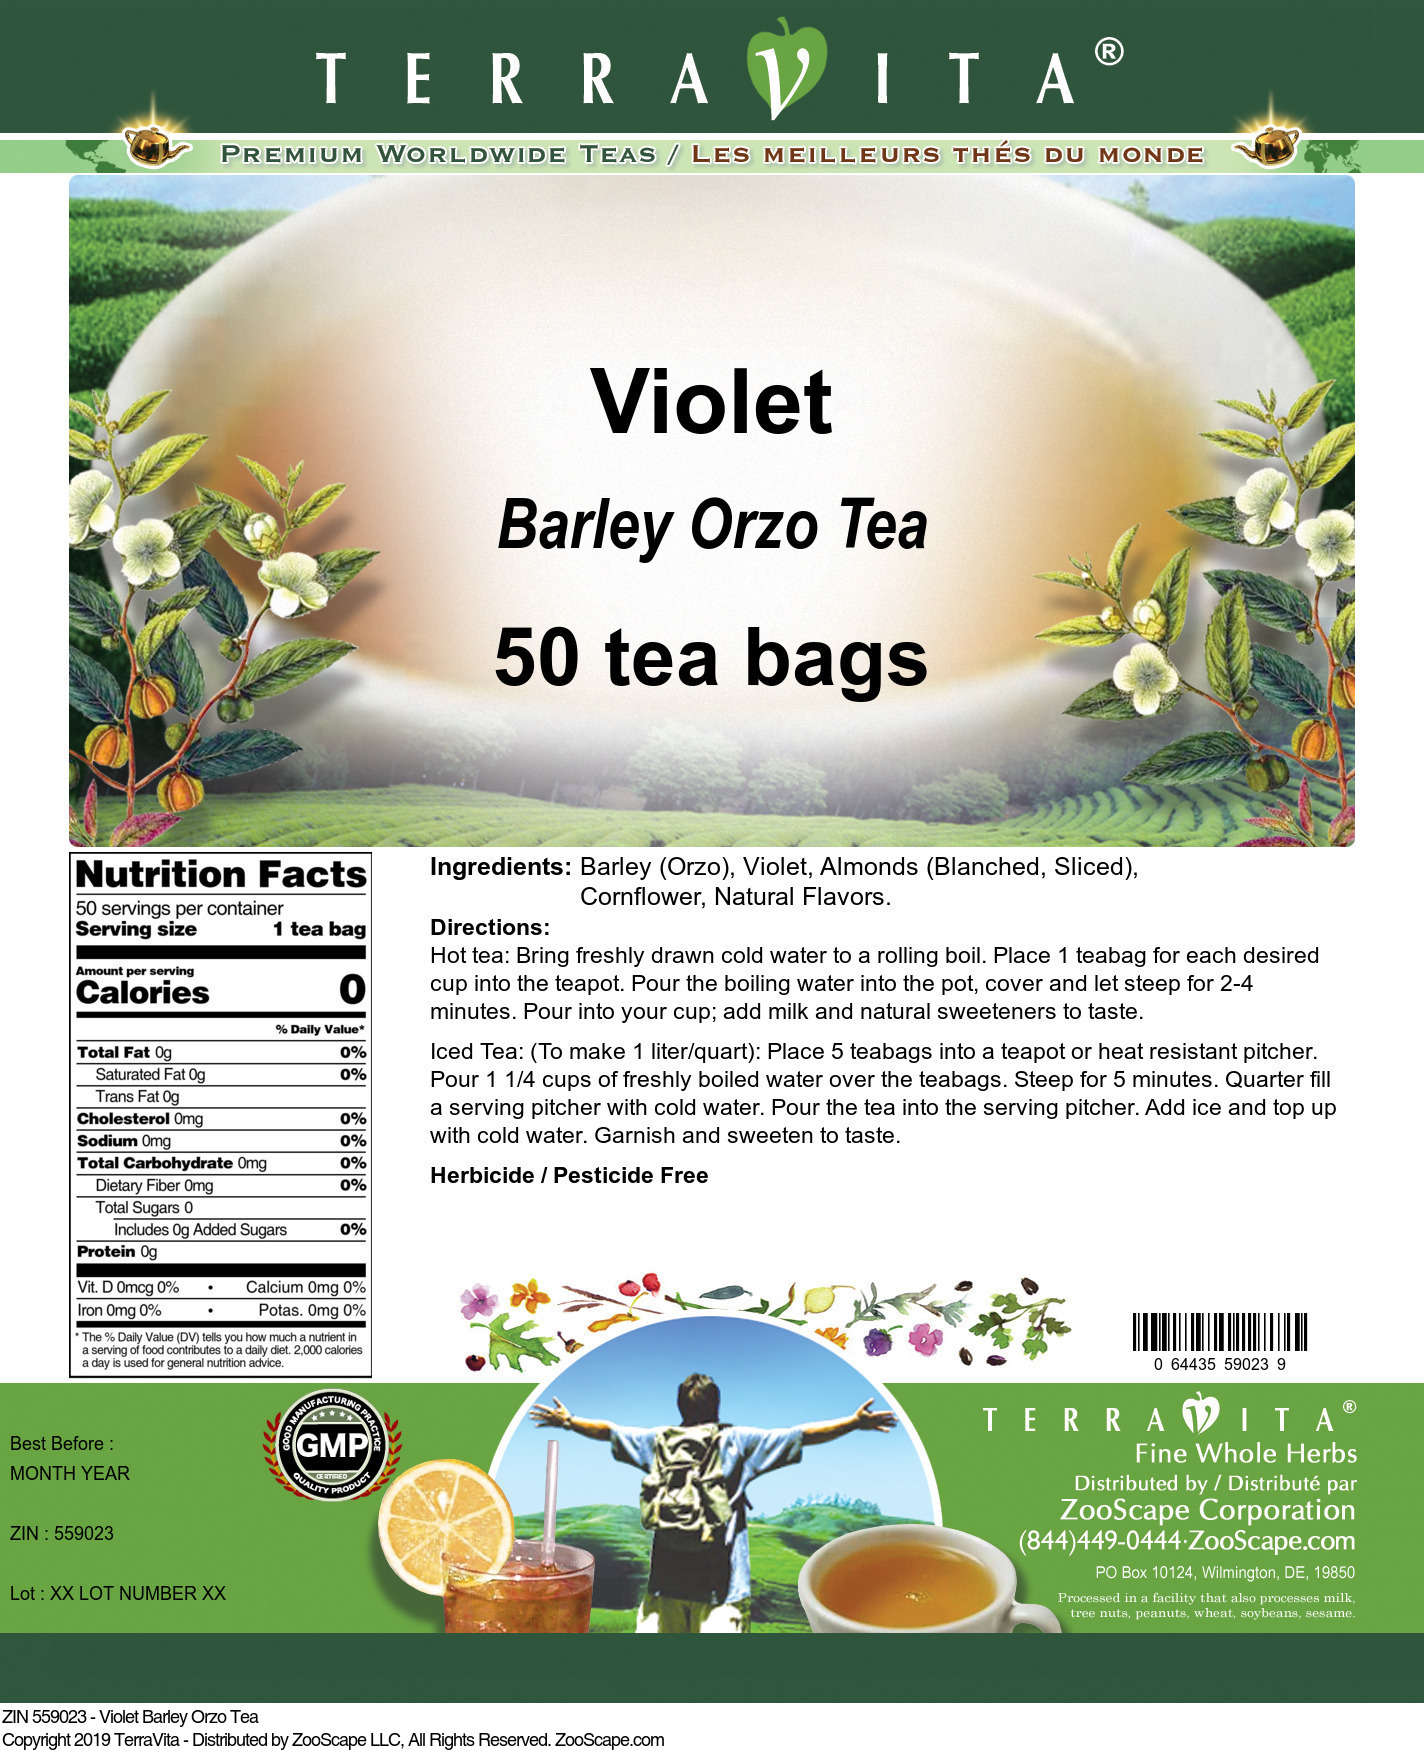 Violet Barley Orzo Tea - Label